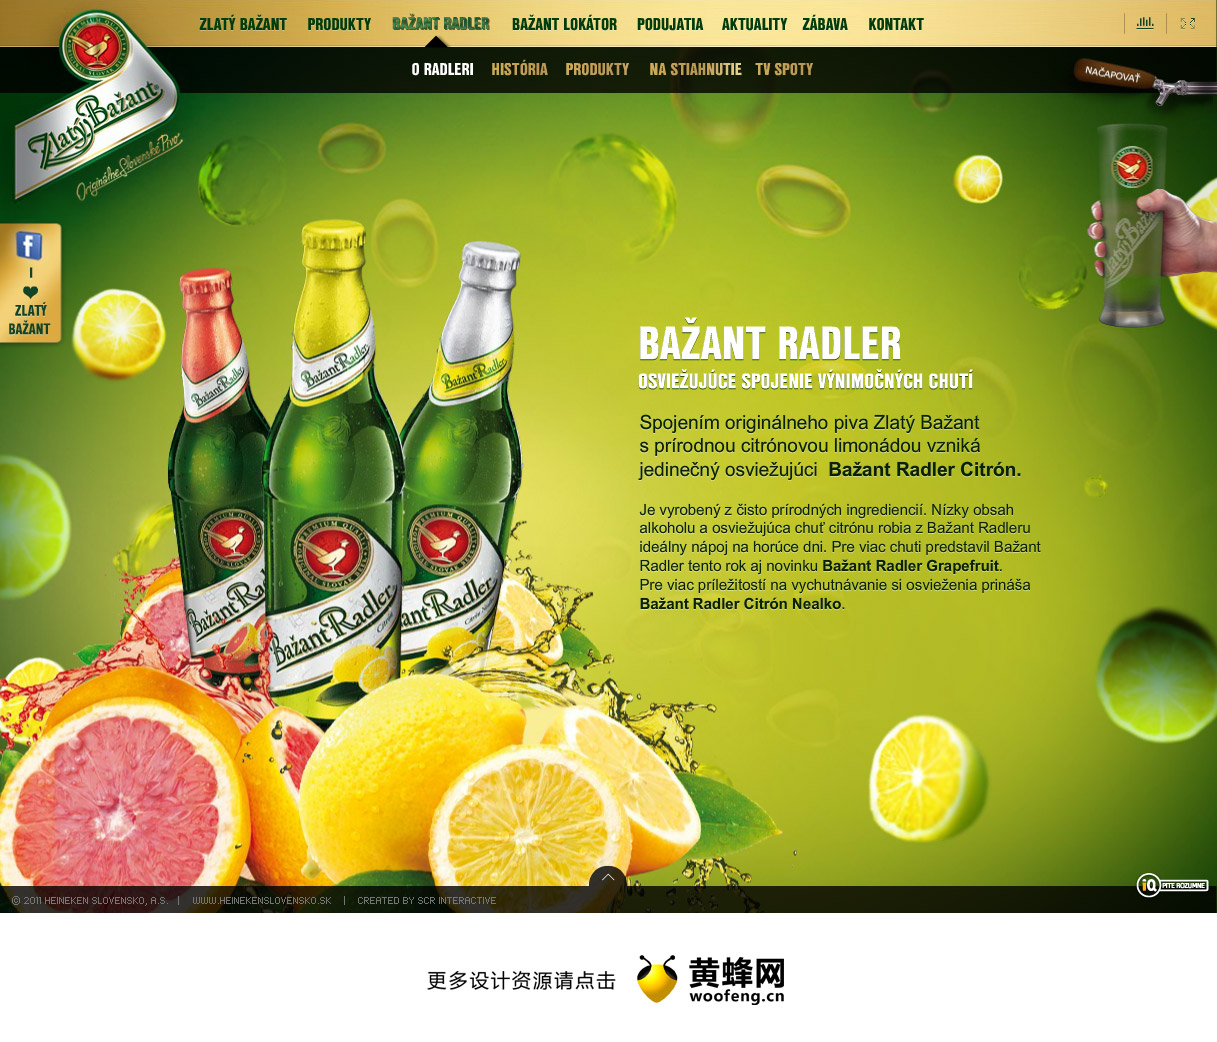 Zlaty bazant啤酒网站，来源自黄蜂网https://woofeng.cn/web/